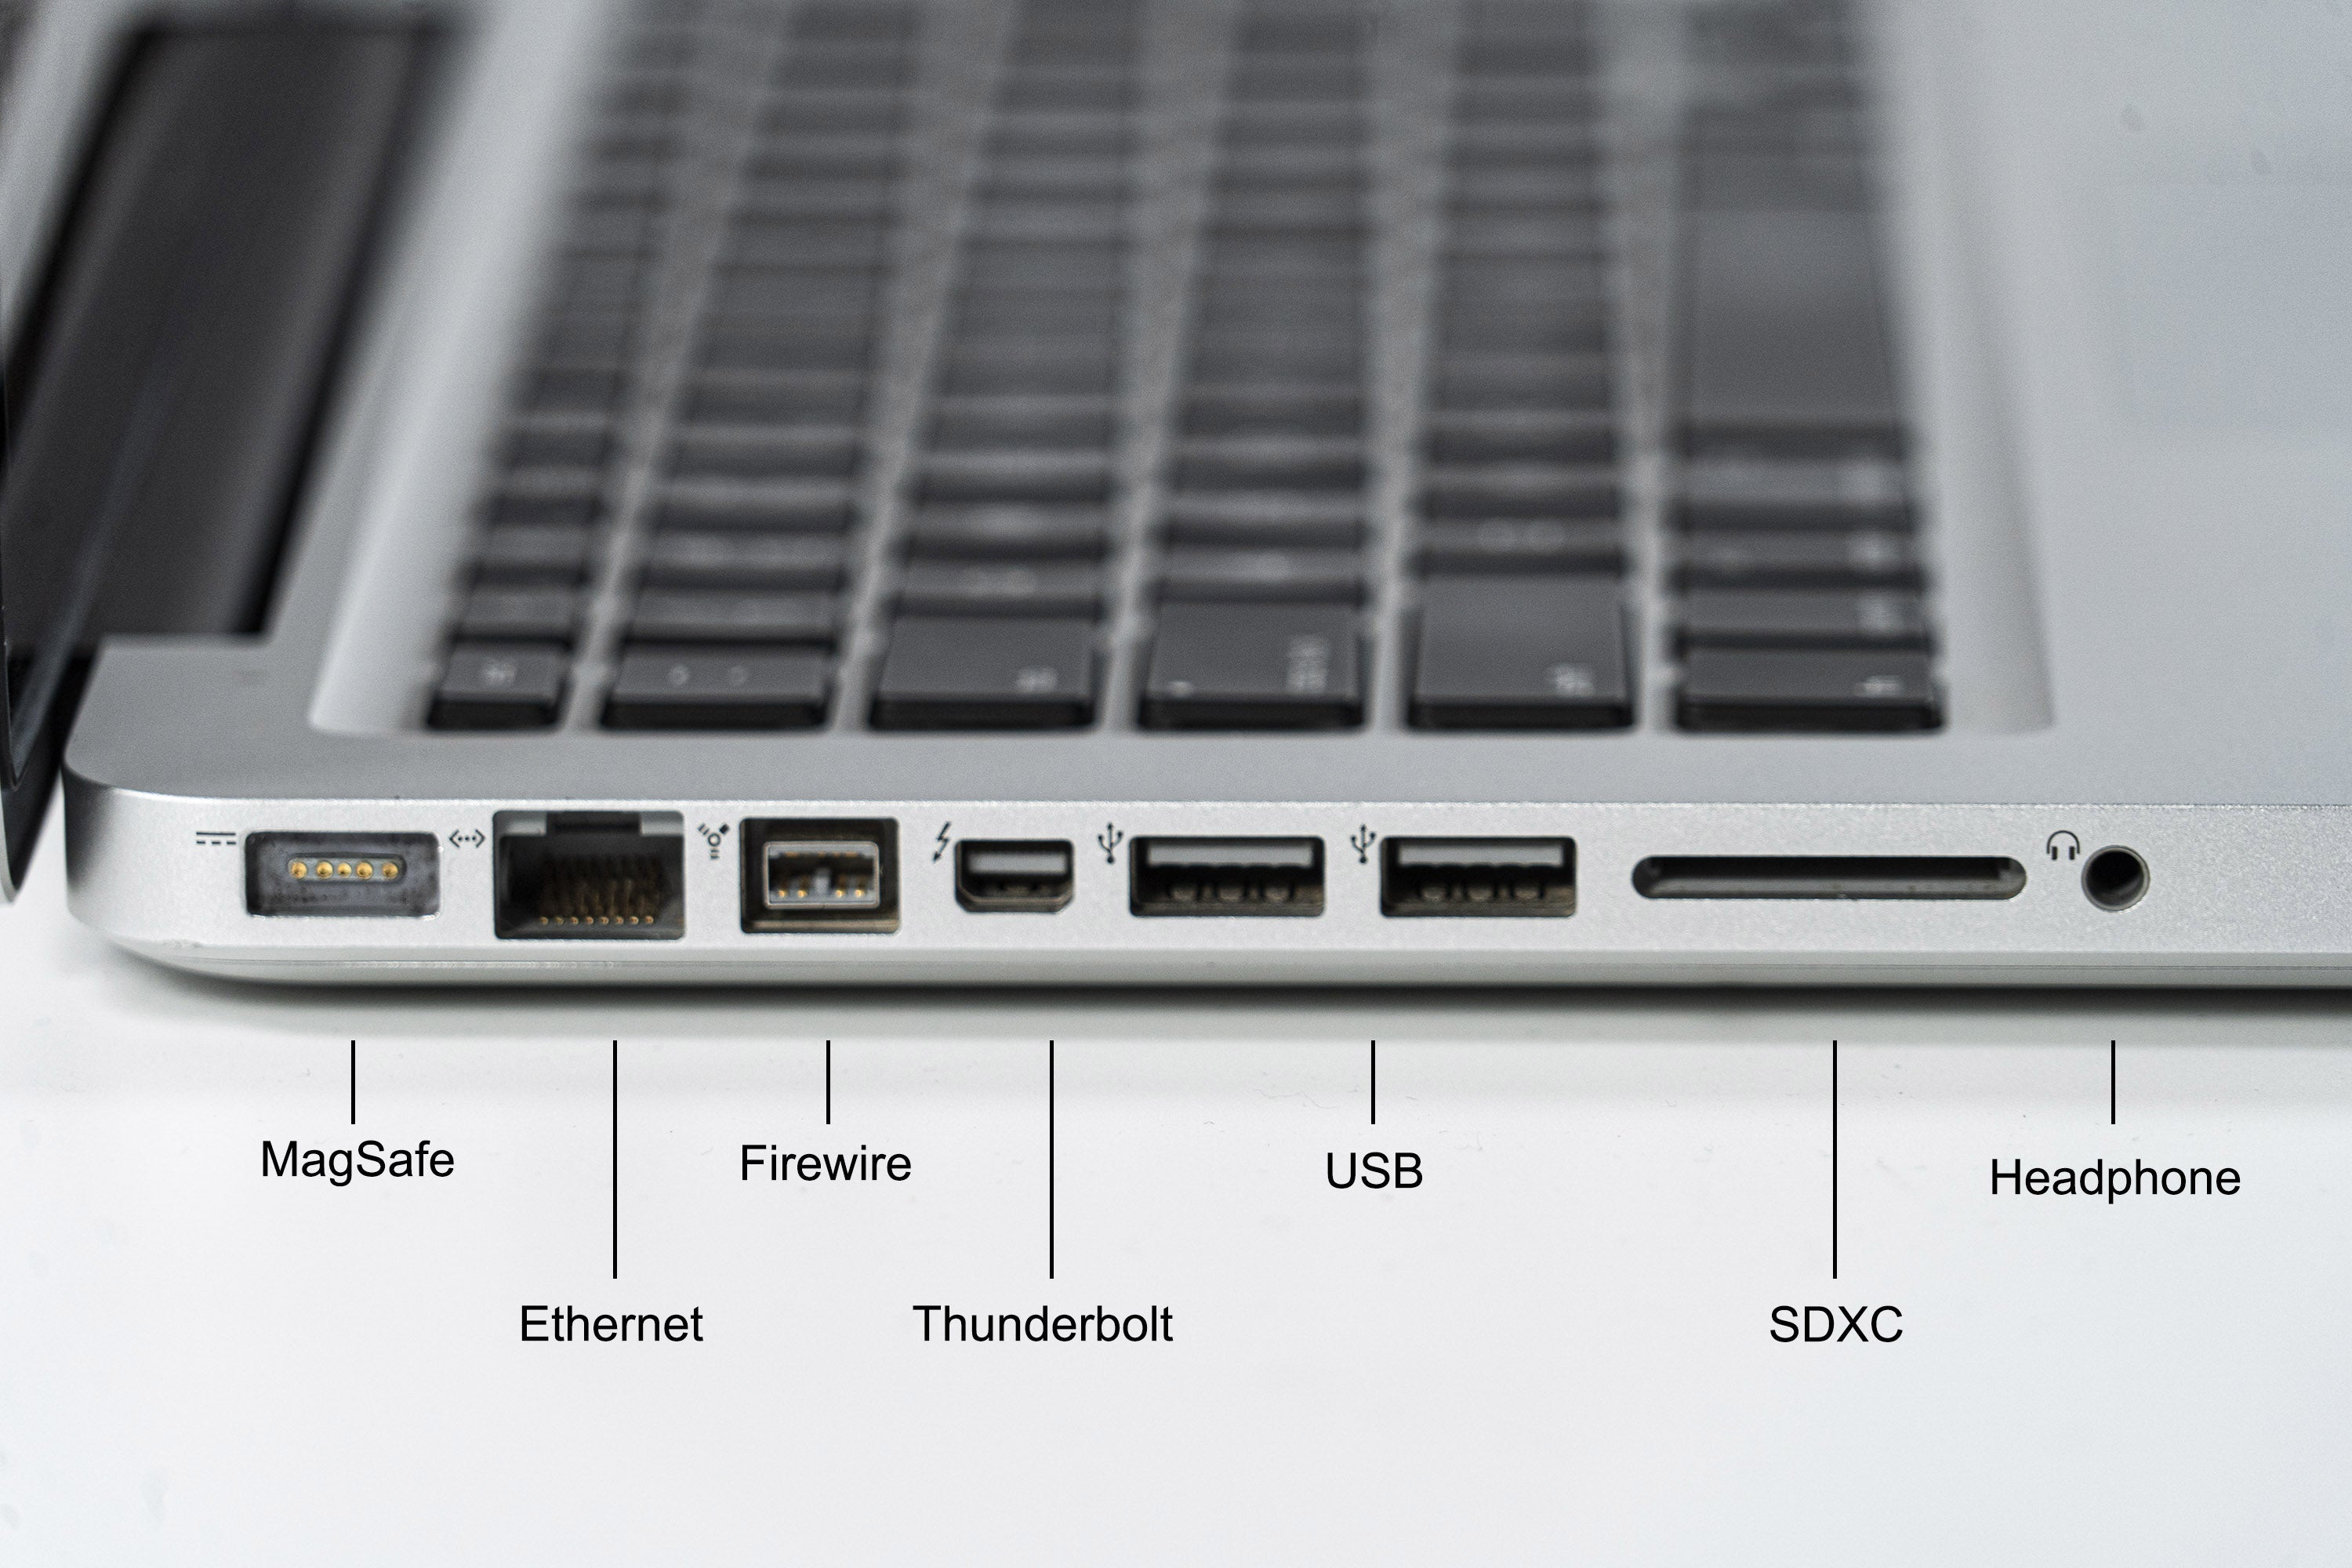 Apple MacBook Pro (Mid 2010) 13-inch 2.4 GHz Core 2 Duo 8GB RAM 1TB Storage  - Silver